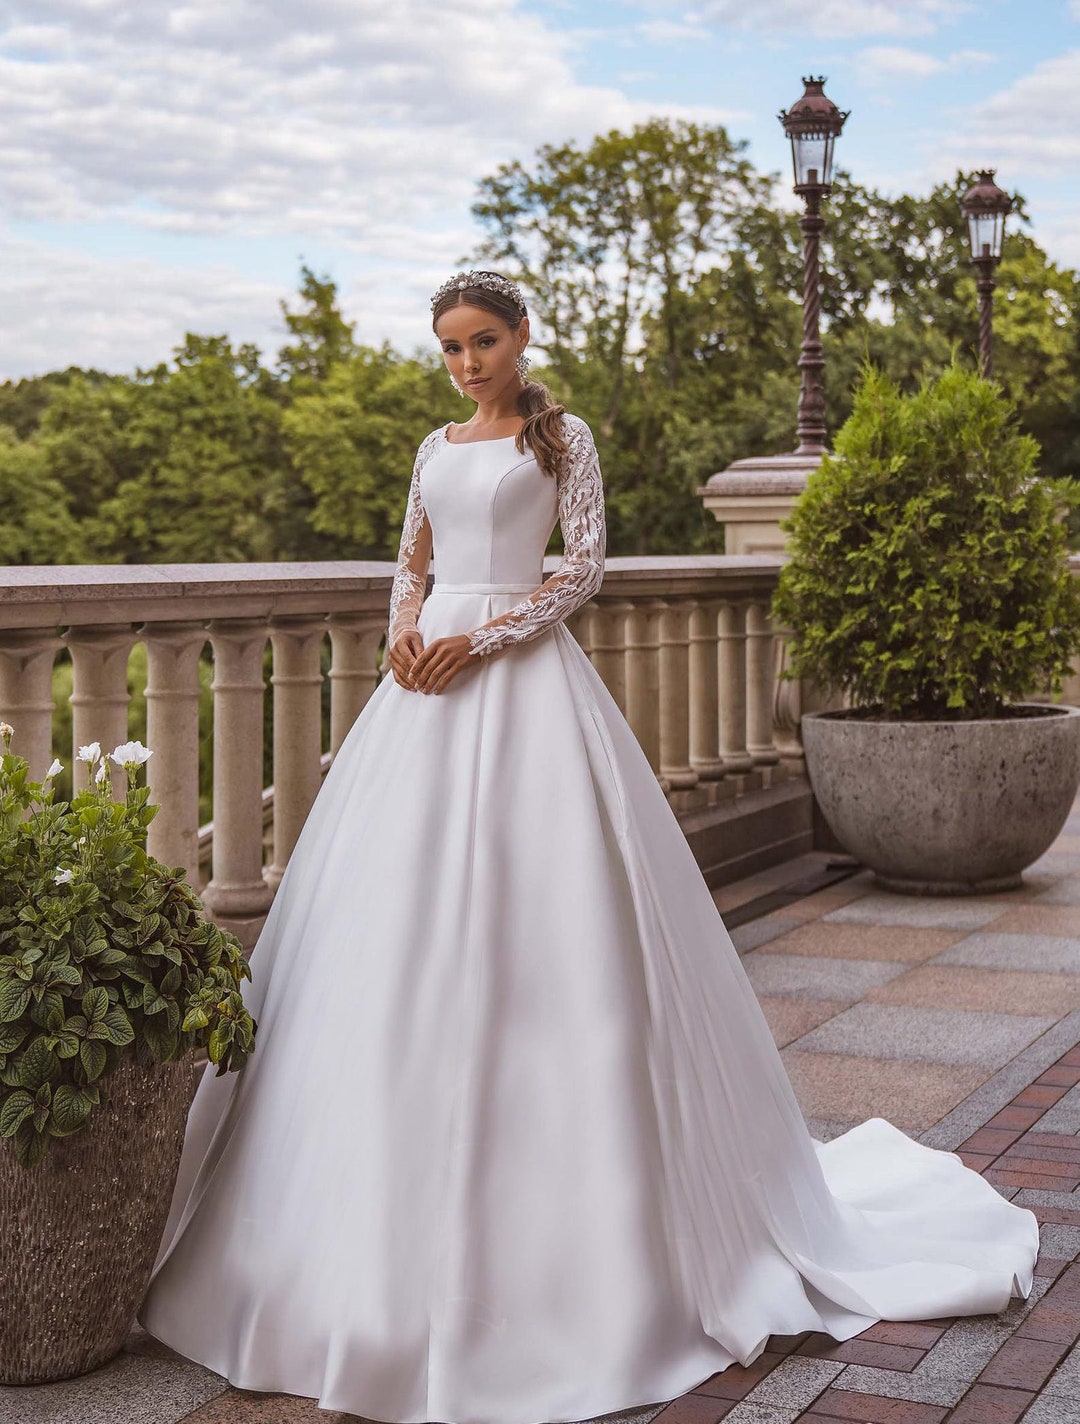 Paris : Wedding dress by Paris designer Pierre Balmain in white velvet like  synthe5ic fabric called